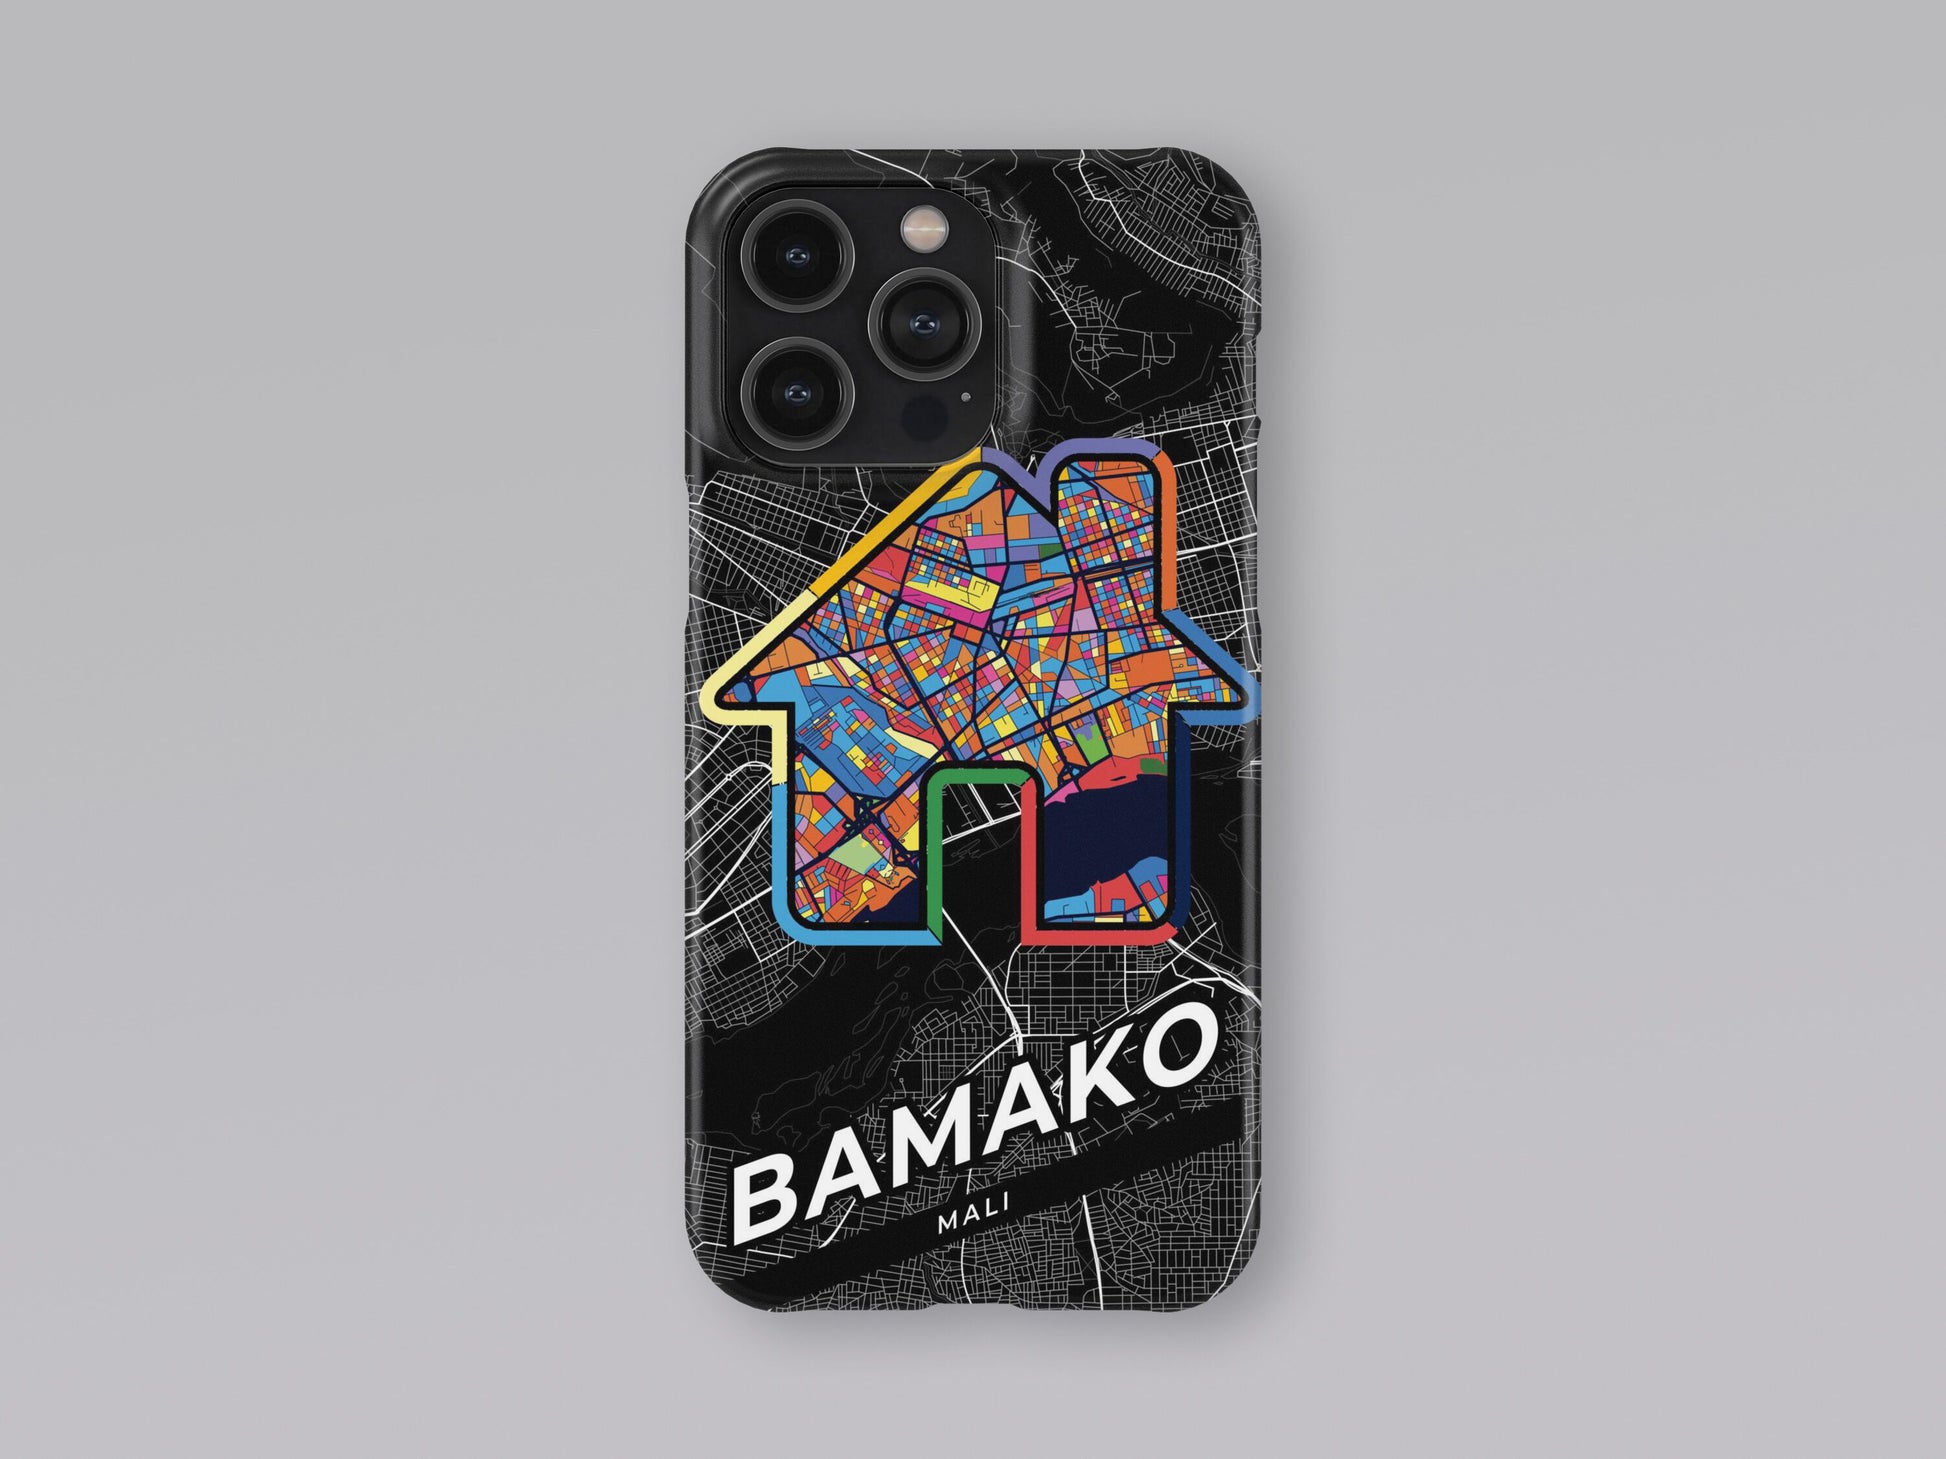 Bamako Mali slim phone case with colorful icon. Birthday, wedding or housewarming gift. Couple match cases. 3